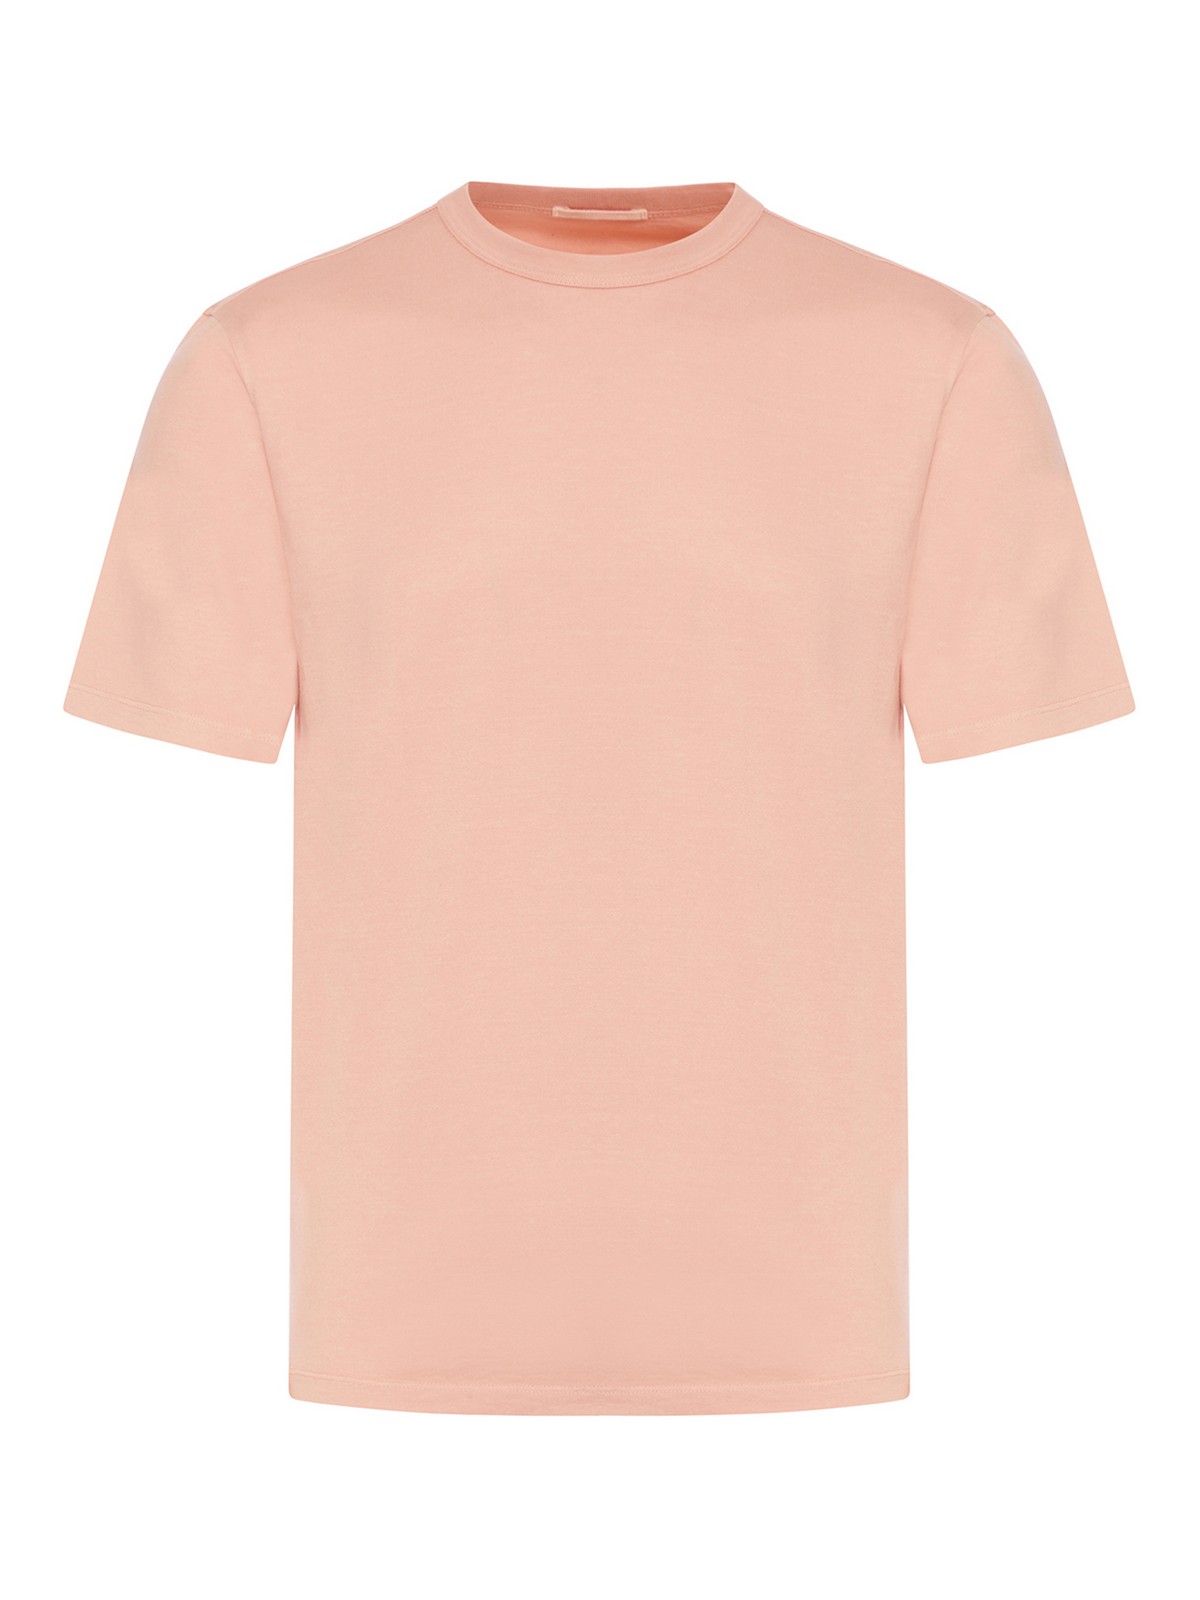 Camiseta - Color Carne Y Neutral